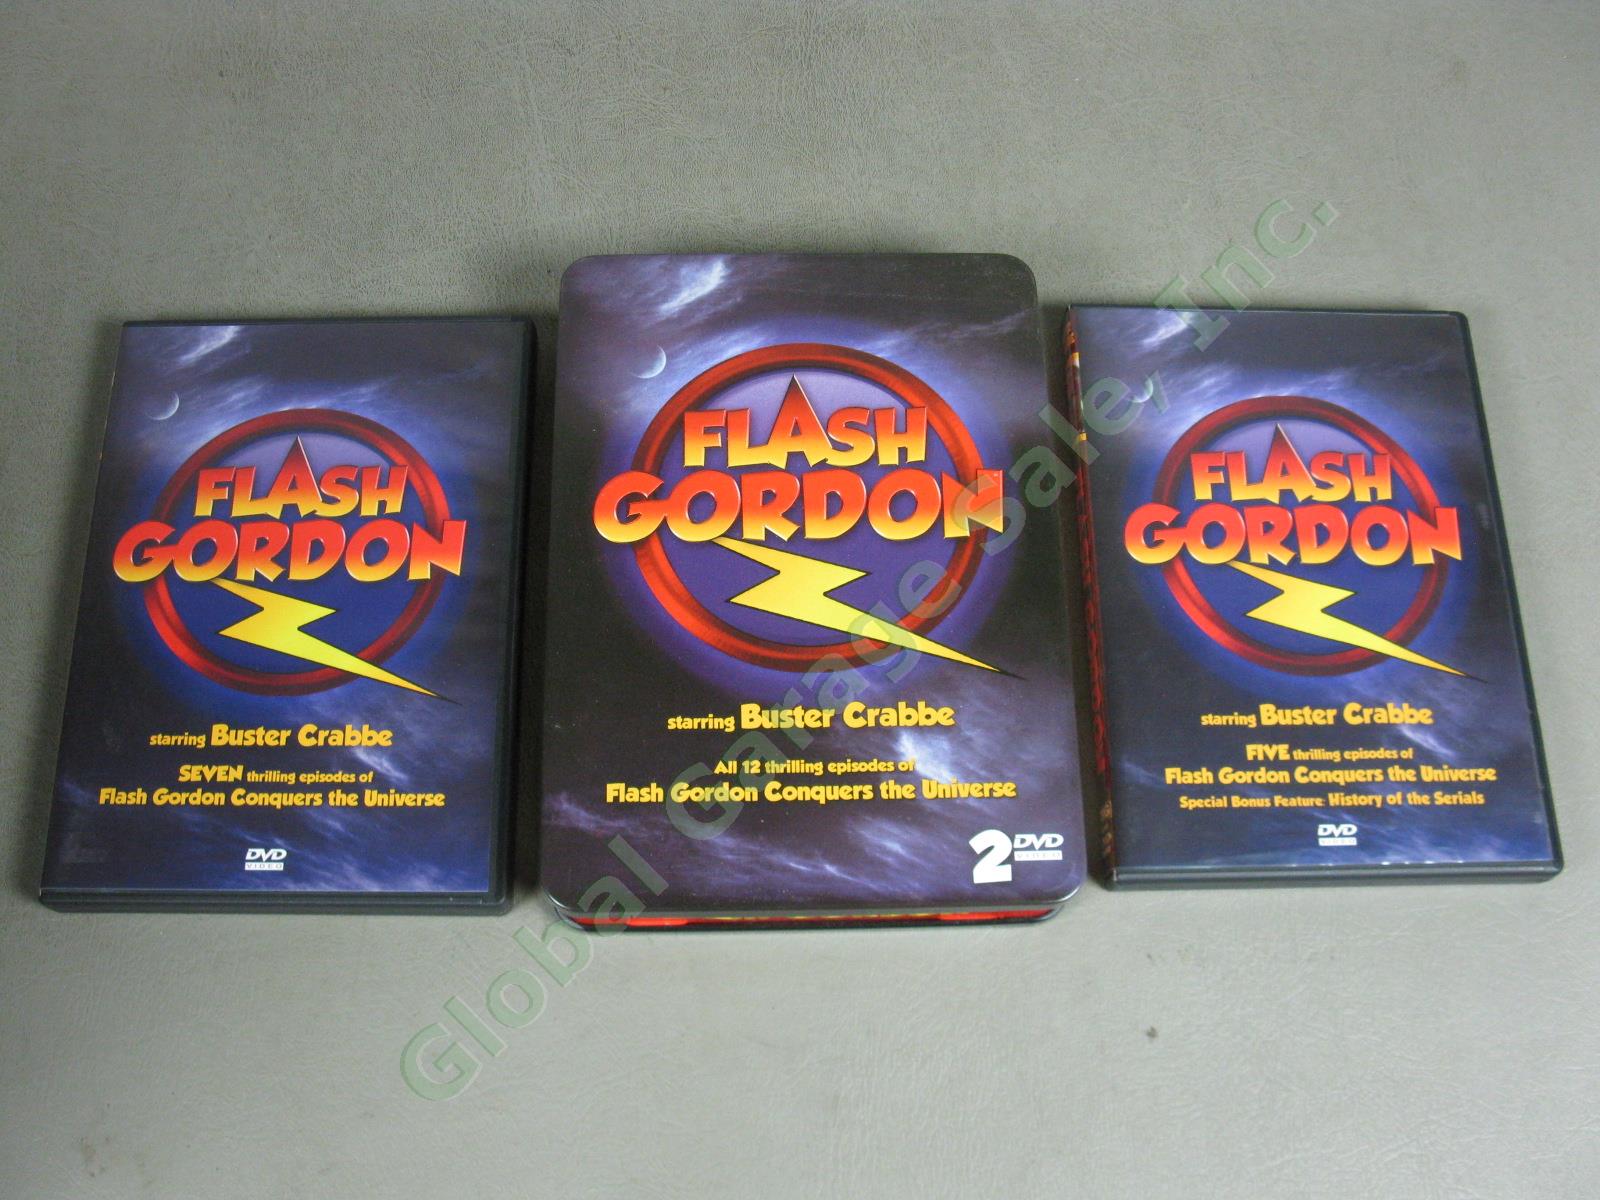 72-DVD Sci-Fi TV Lot Complete Twilight Zone Flash Gordon Battlestar Galactica ++ 10